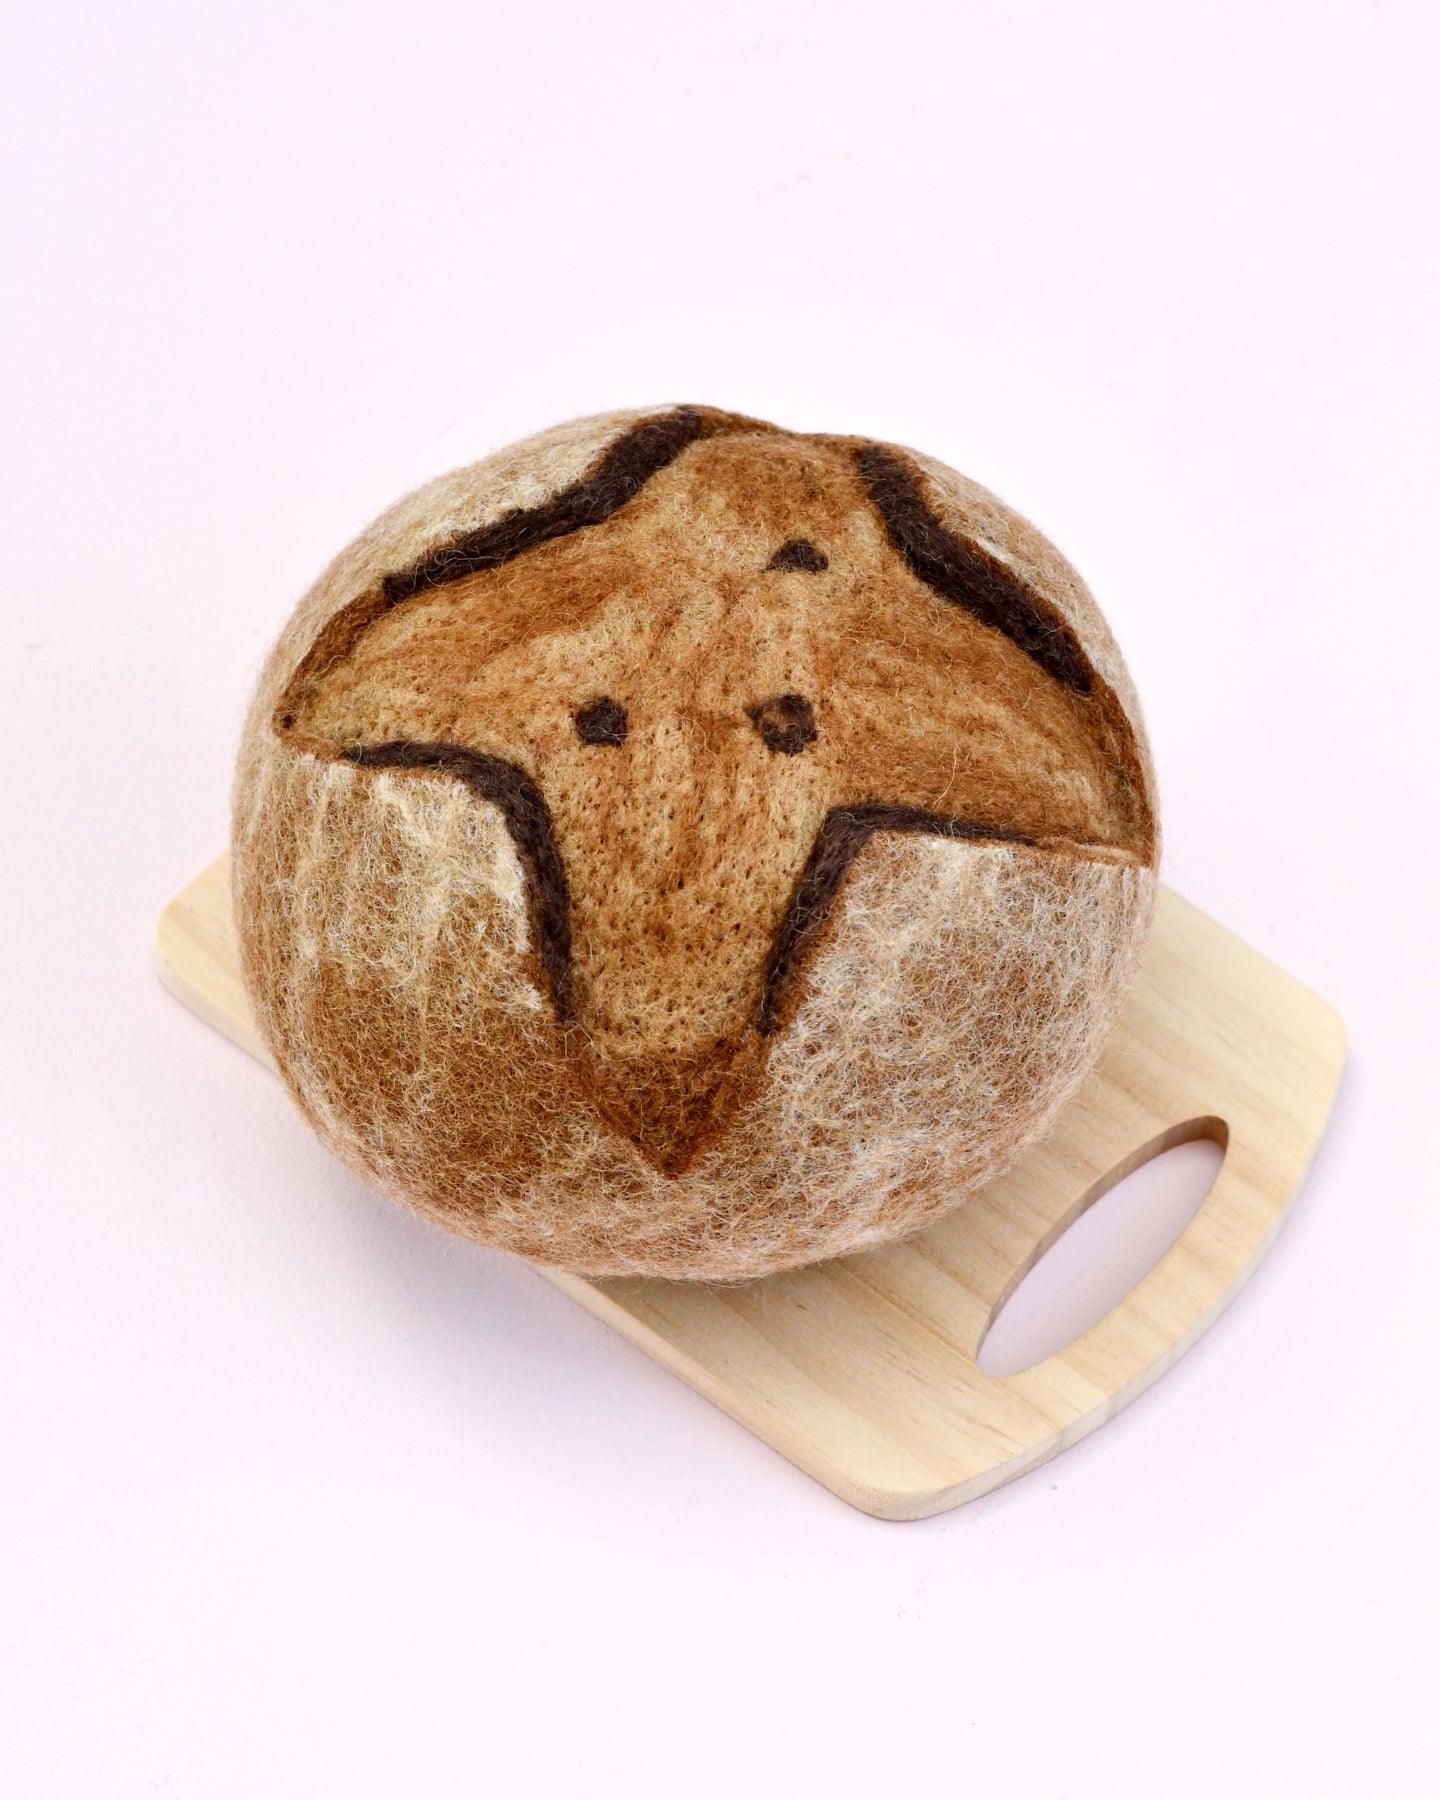 Felt Sourdough Bread - Tara Treasures